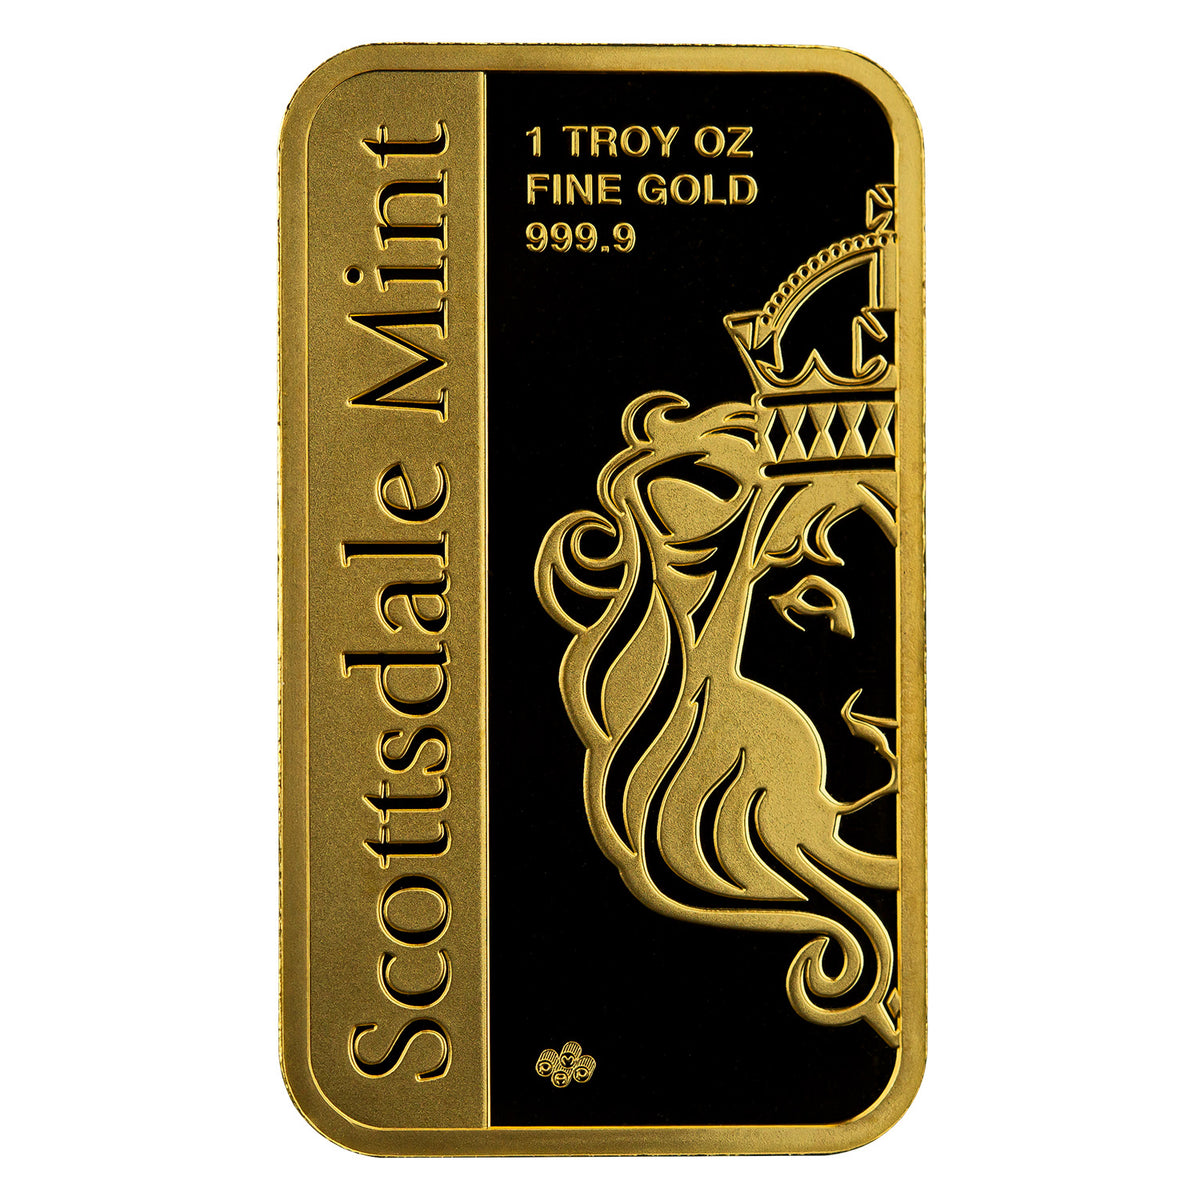 Scottsdale Mint PAMP Archangel Michael 1 oz Gold Bar